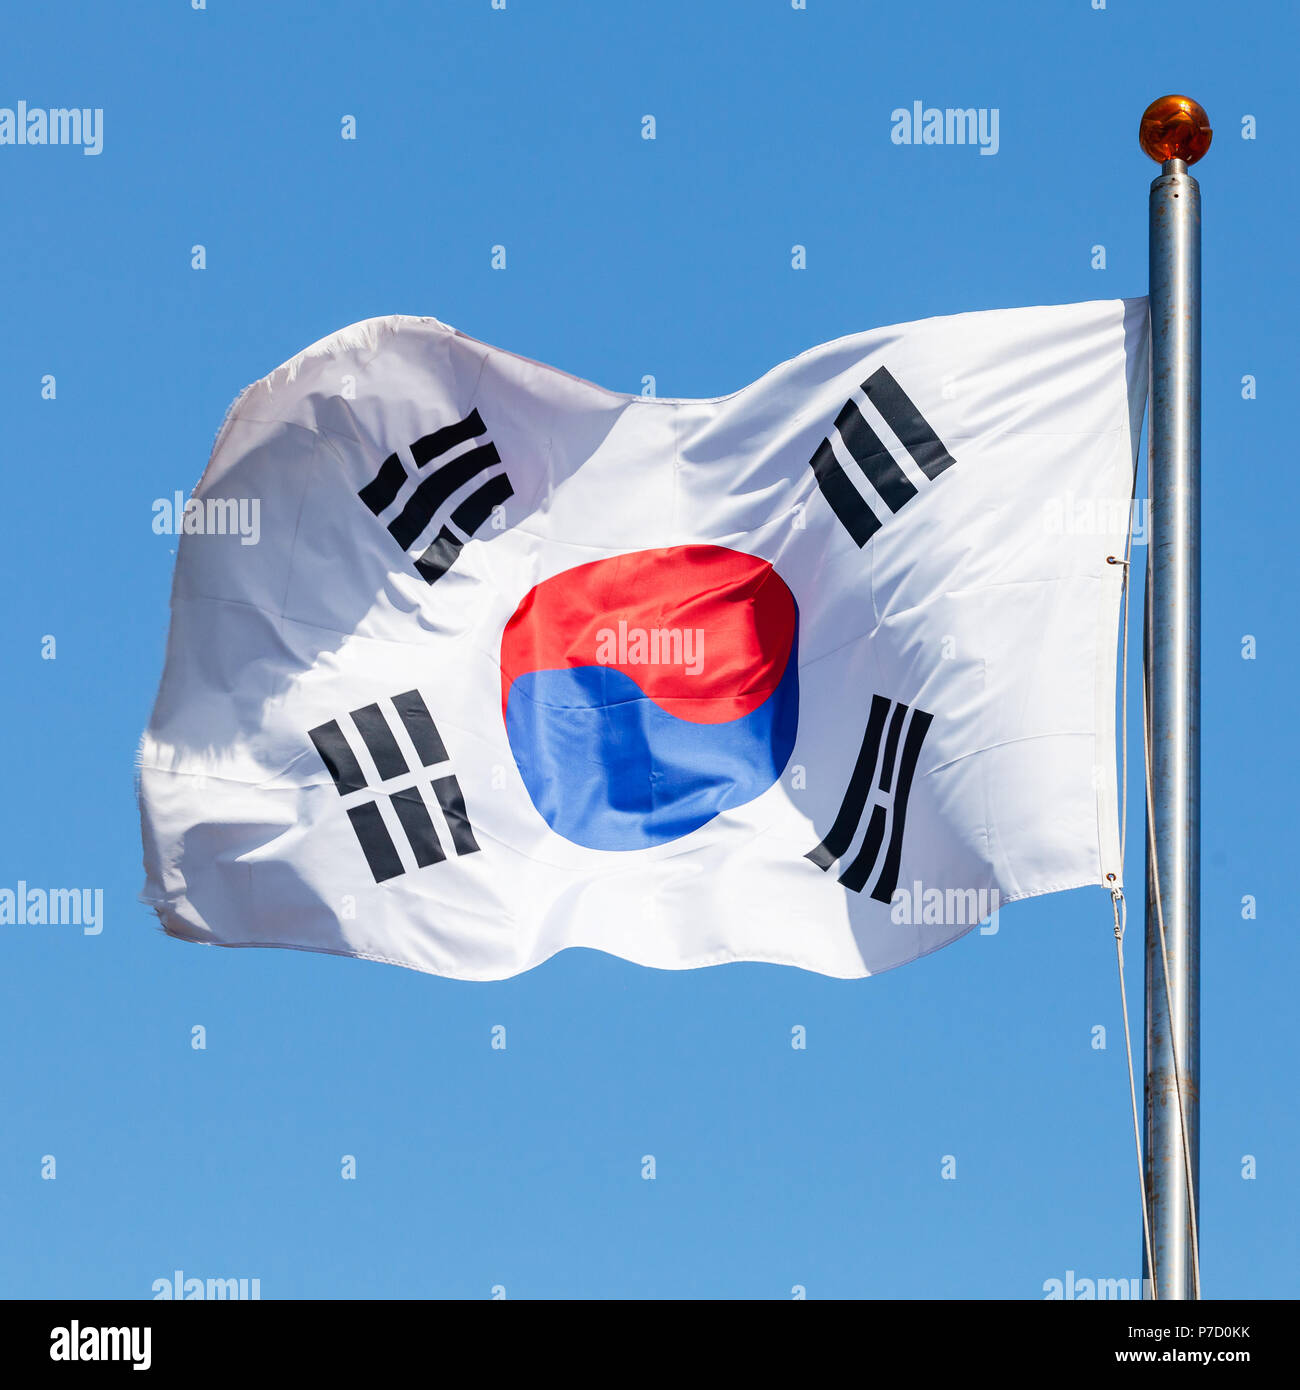 Flag of South Korea, also known as the Taegukgi waving on a flagpole Stock Photo